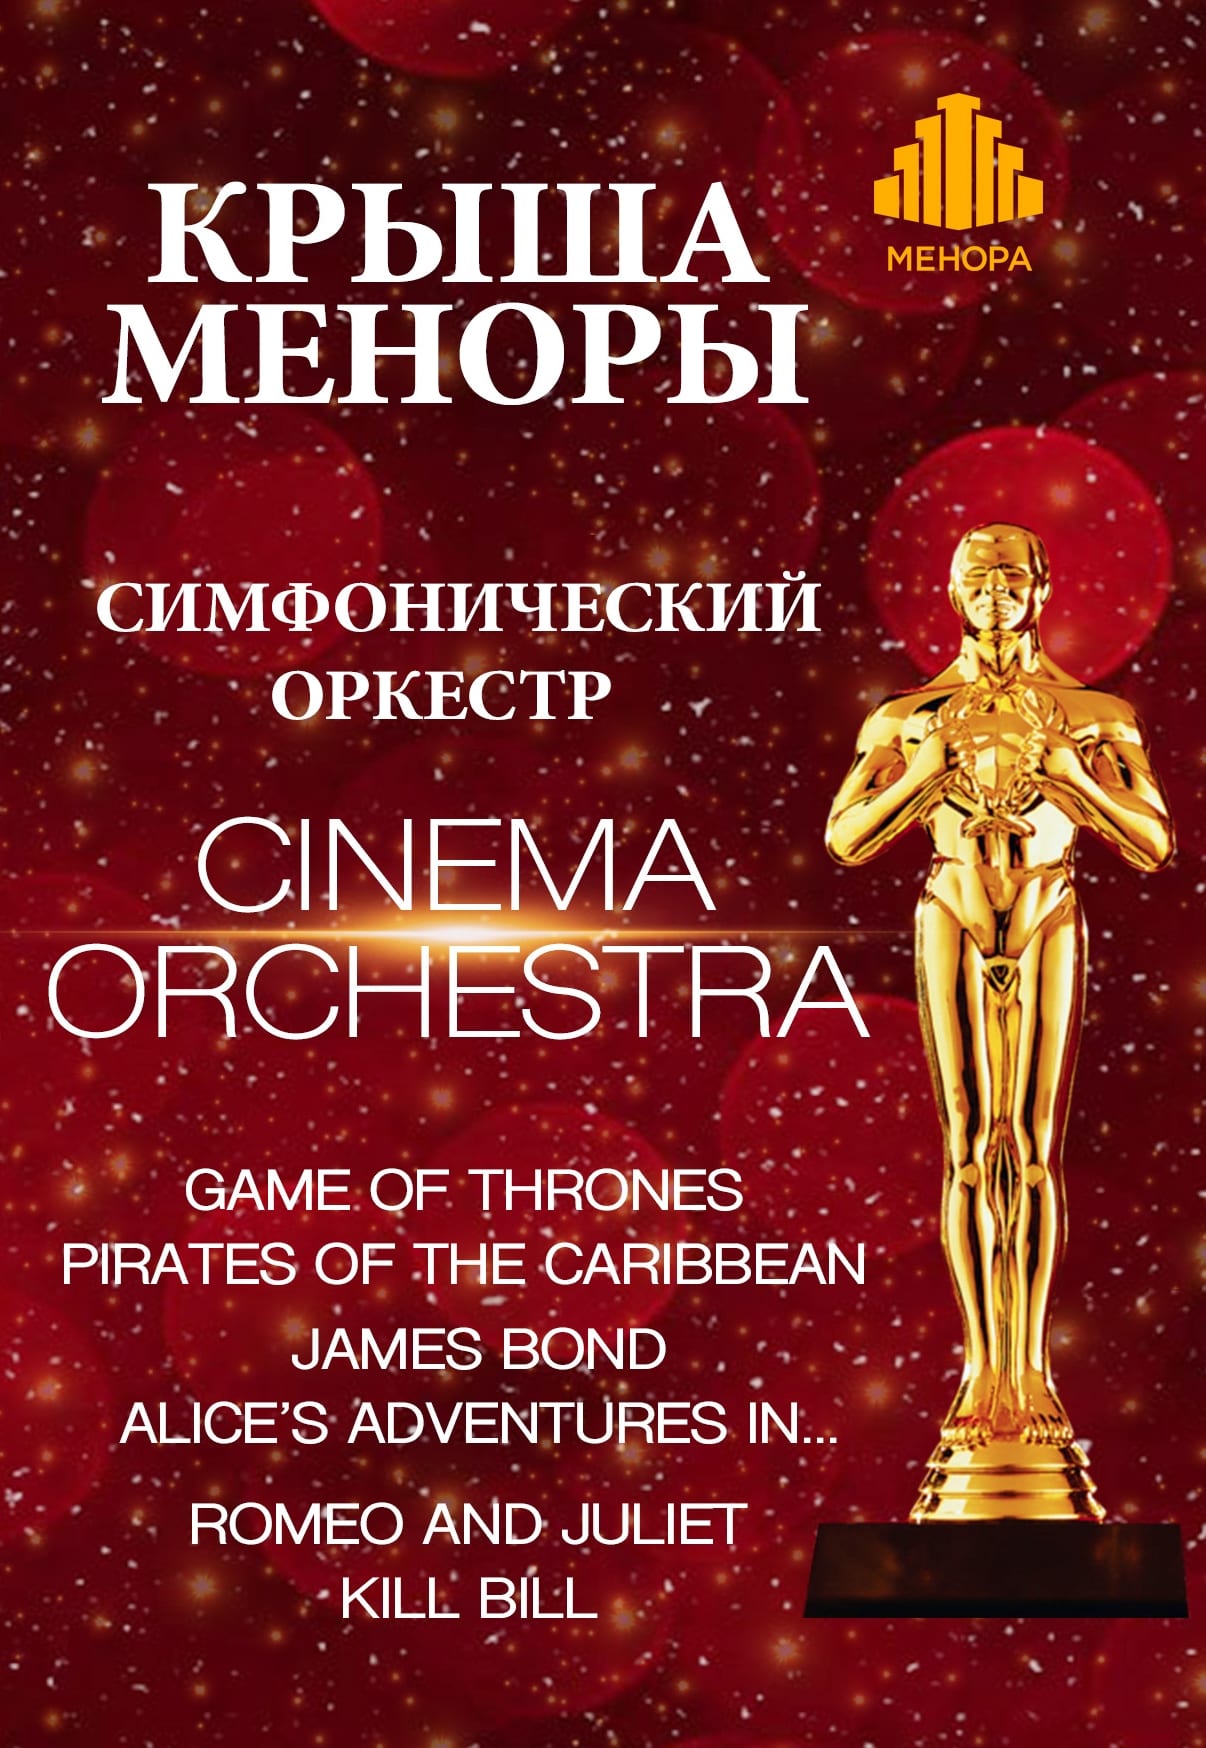 Cinema Orchestra на Арт-Крыше Днепр, 28.07.2019, цена, расписание. Афиша Днепра